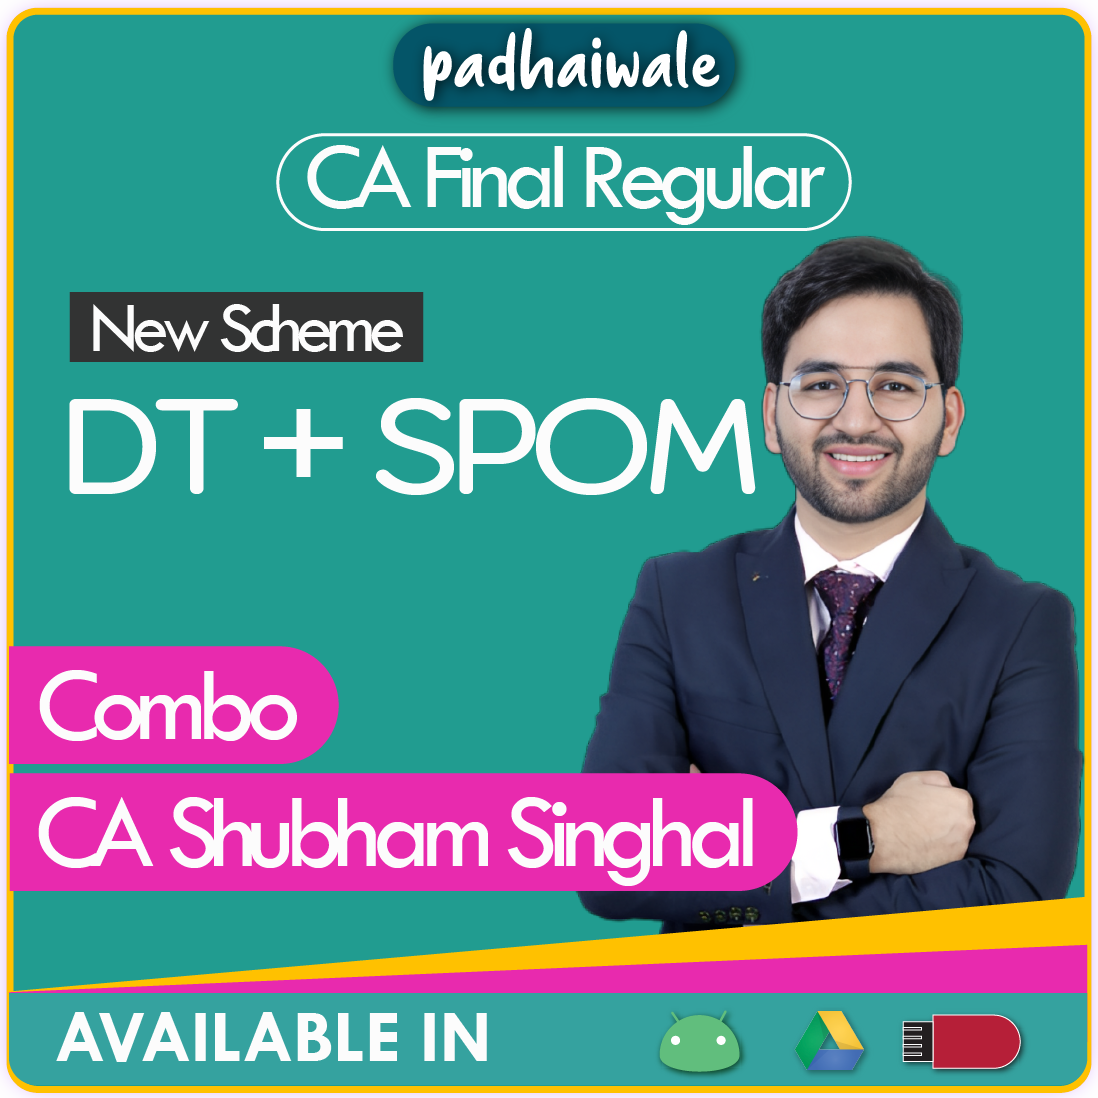 CA Final DT + SPOM Combo Regular Batch New Scheme by CA Shubham Singhal